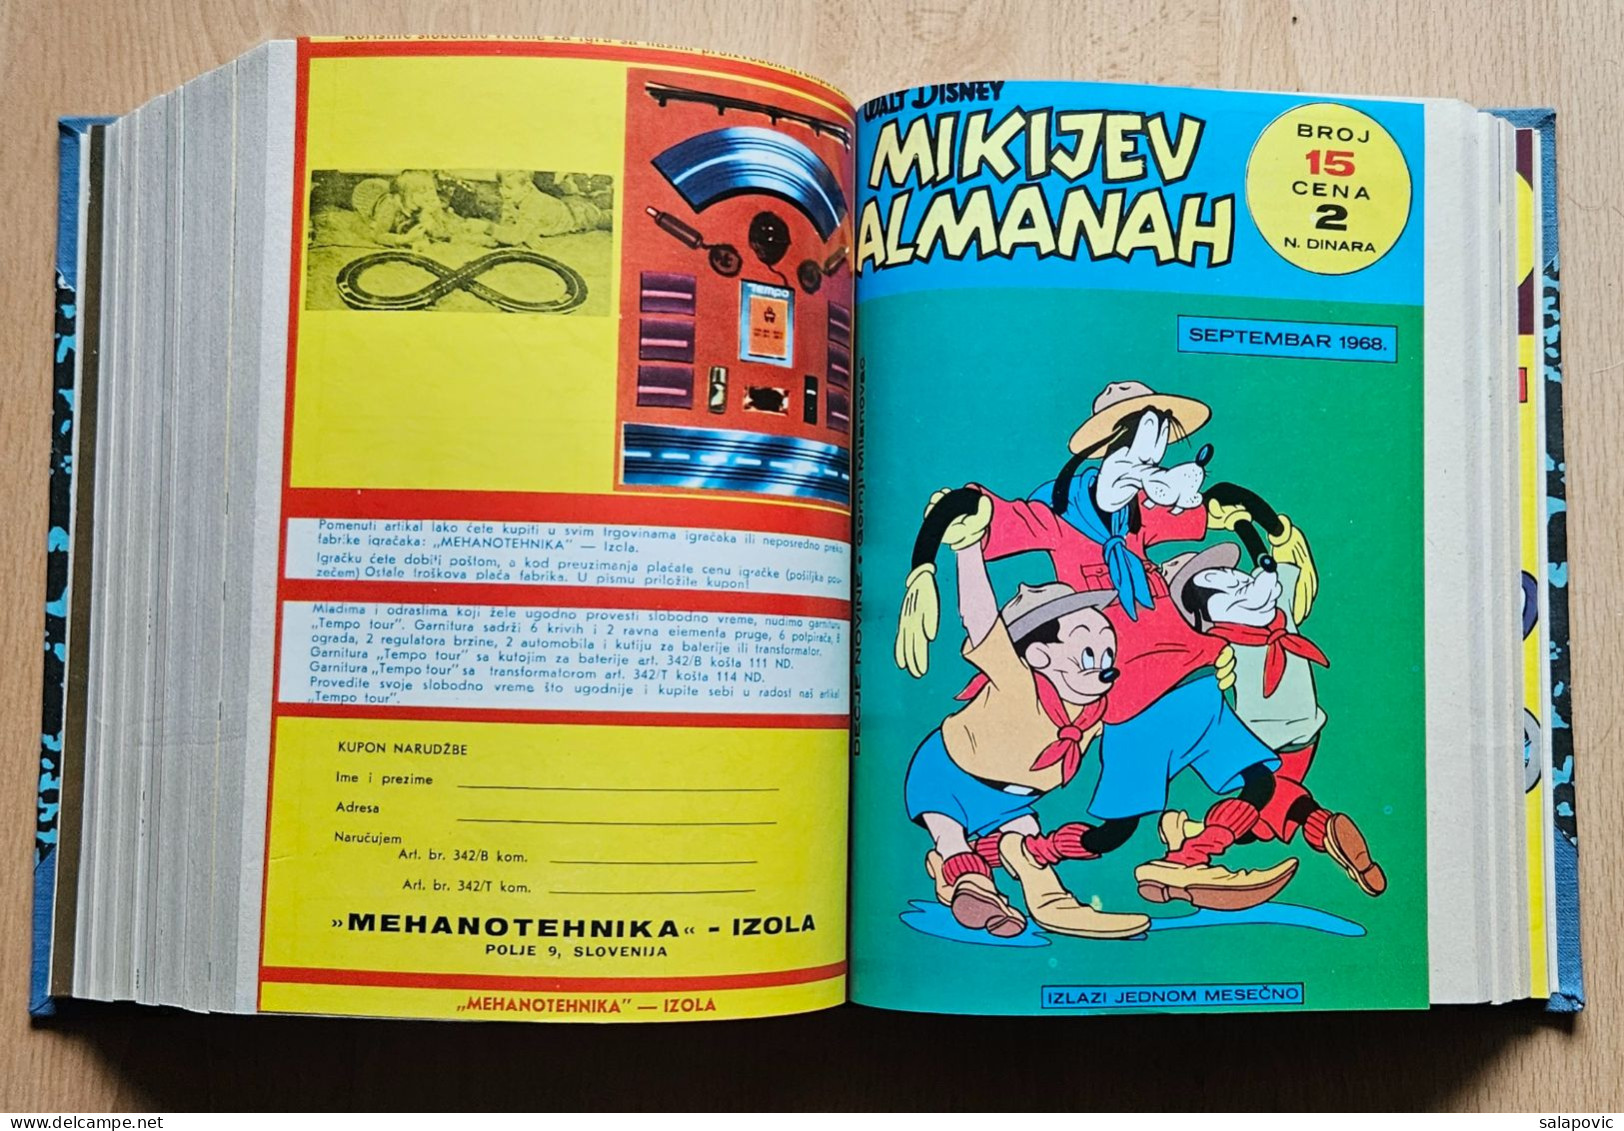 MIKIJEV ALMANAH 12 numbers bound 7 - 18, Vintage Comic Book Yugoslavia Yugoslavian Mickey Mouse Disney Comics